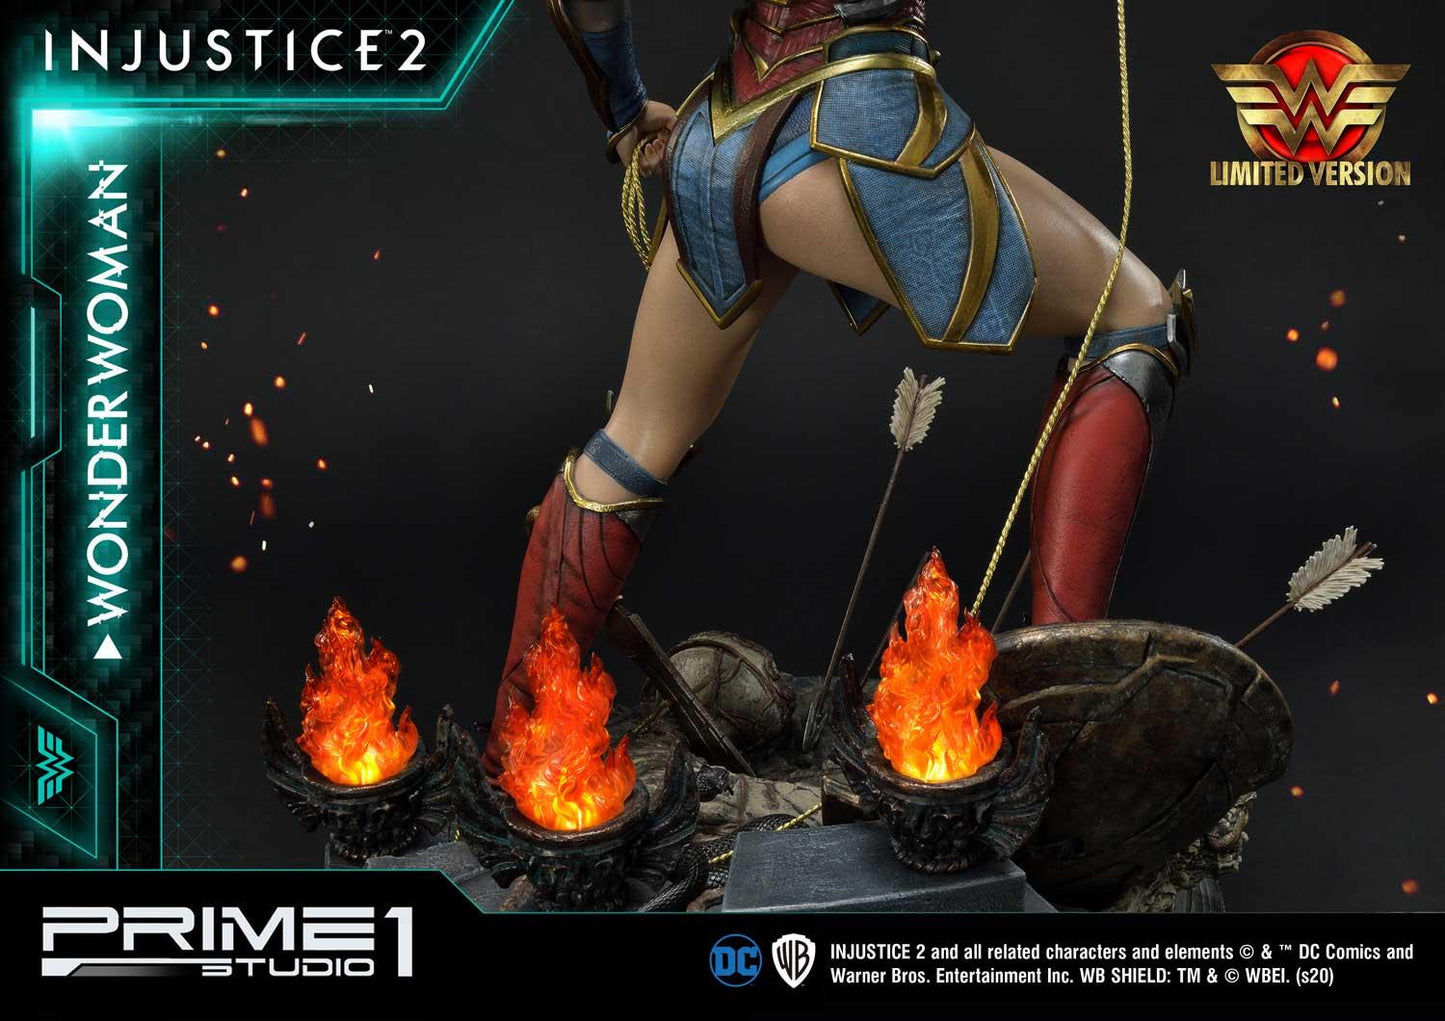 Wonder Woman Limited Version Injustice 2 Prime 1 Studio 1/4 Scale Statue